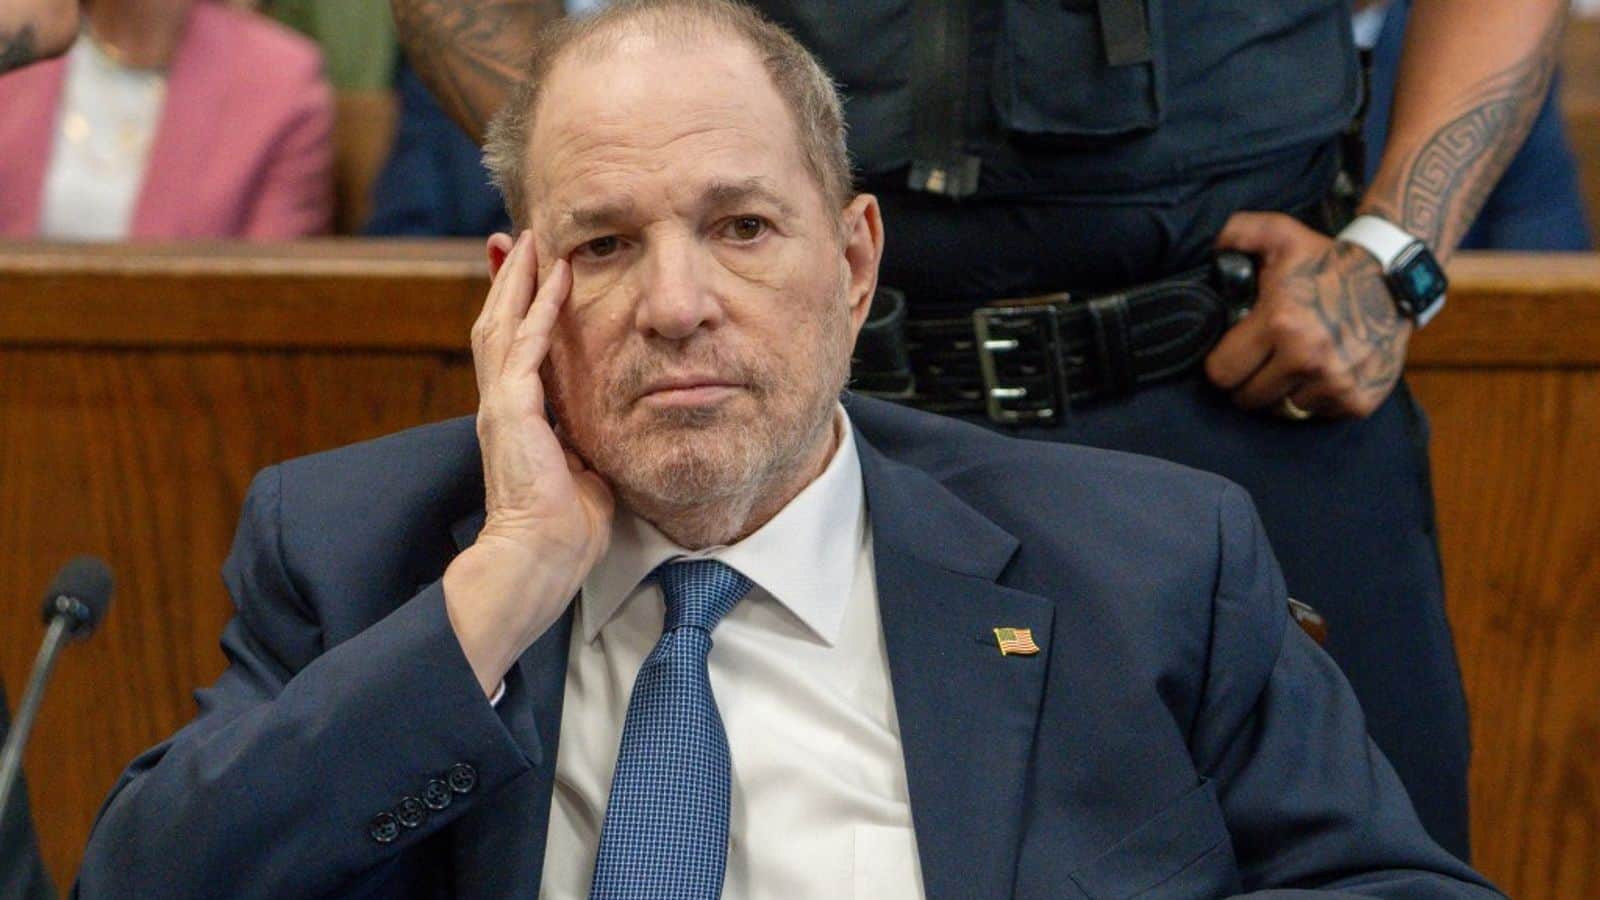 Harvey Weinstein to face new rape trial, announces Manhattan DA